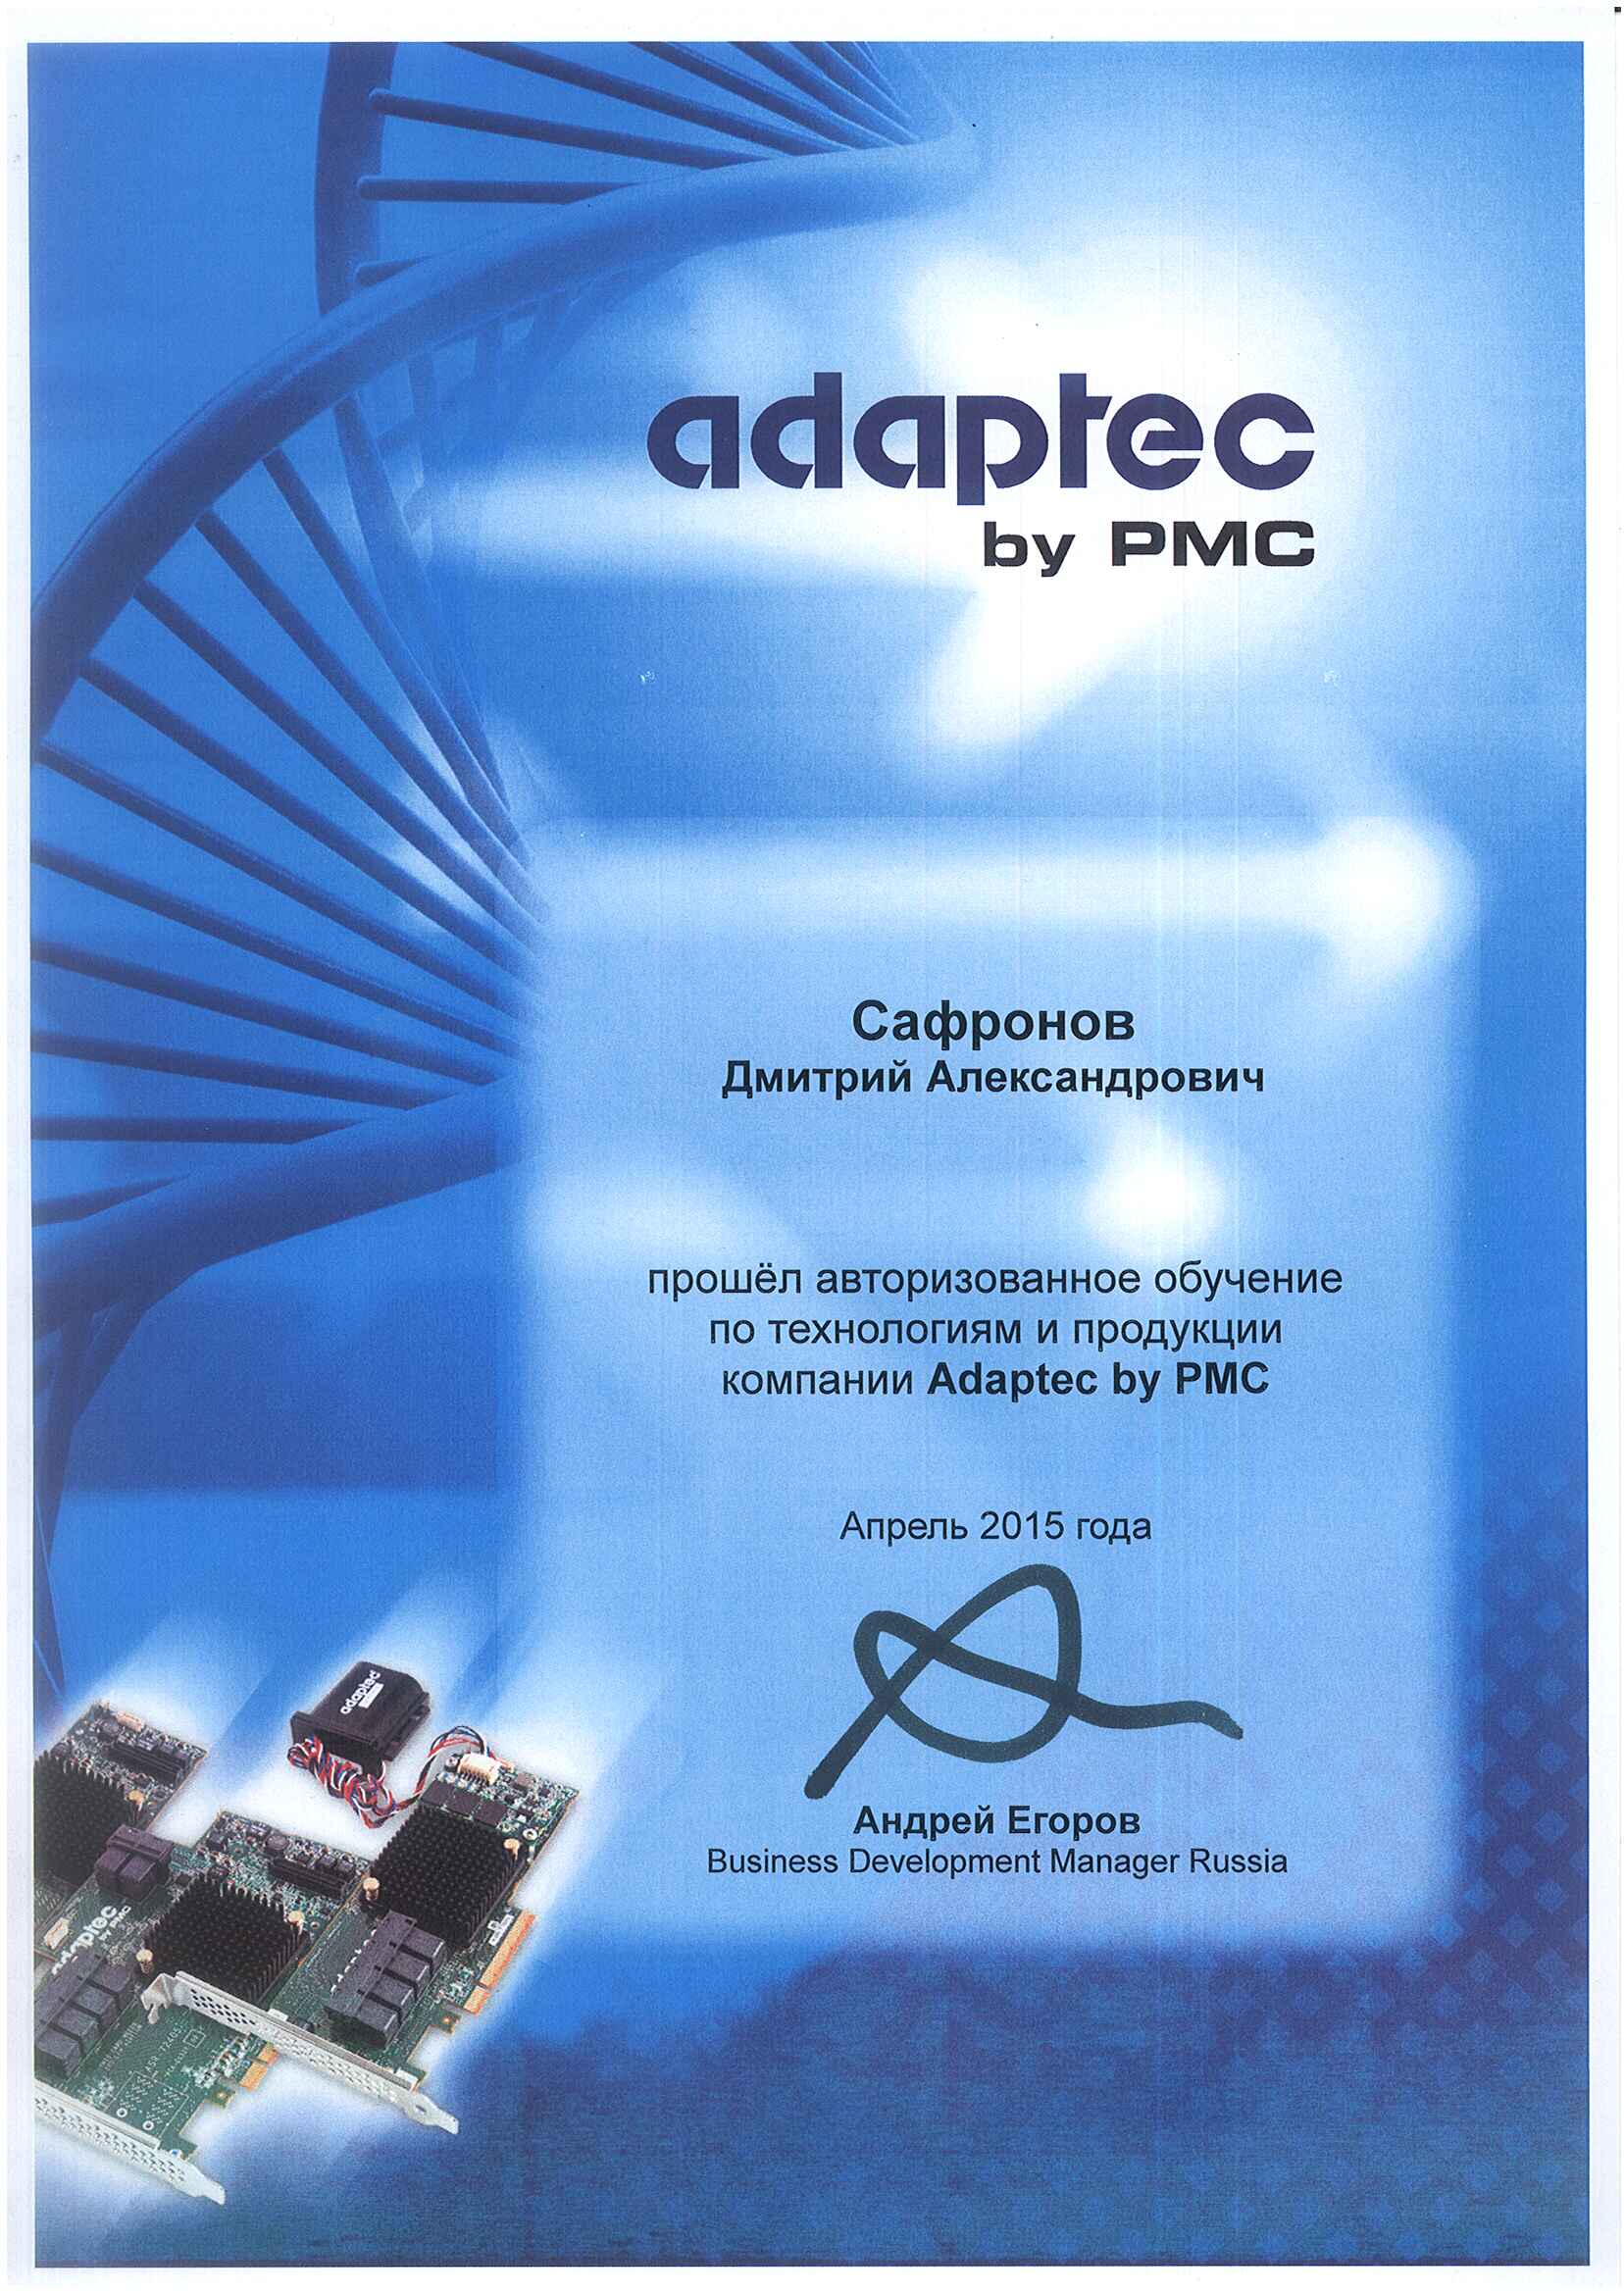 Сертификат Adaptec-Сафронов Дмитрий Александрович